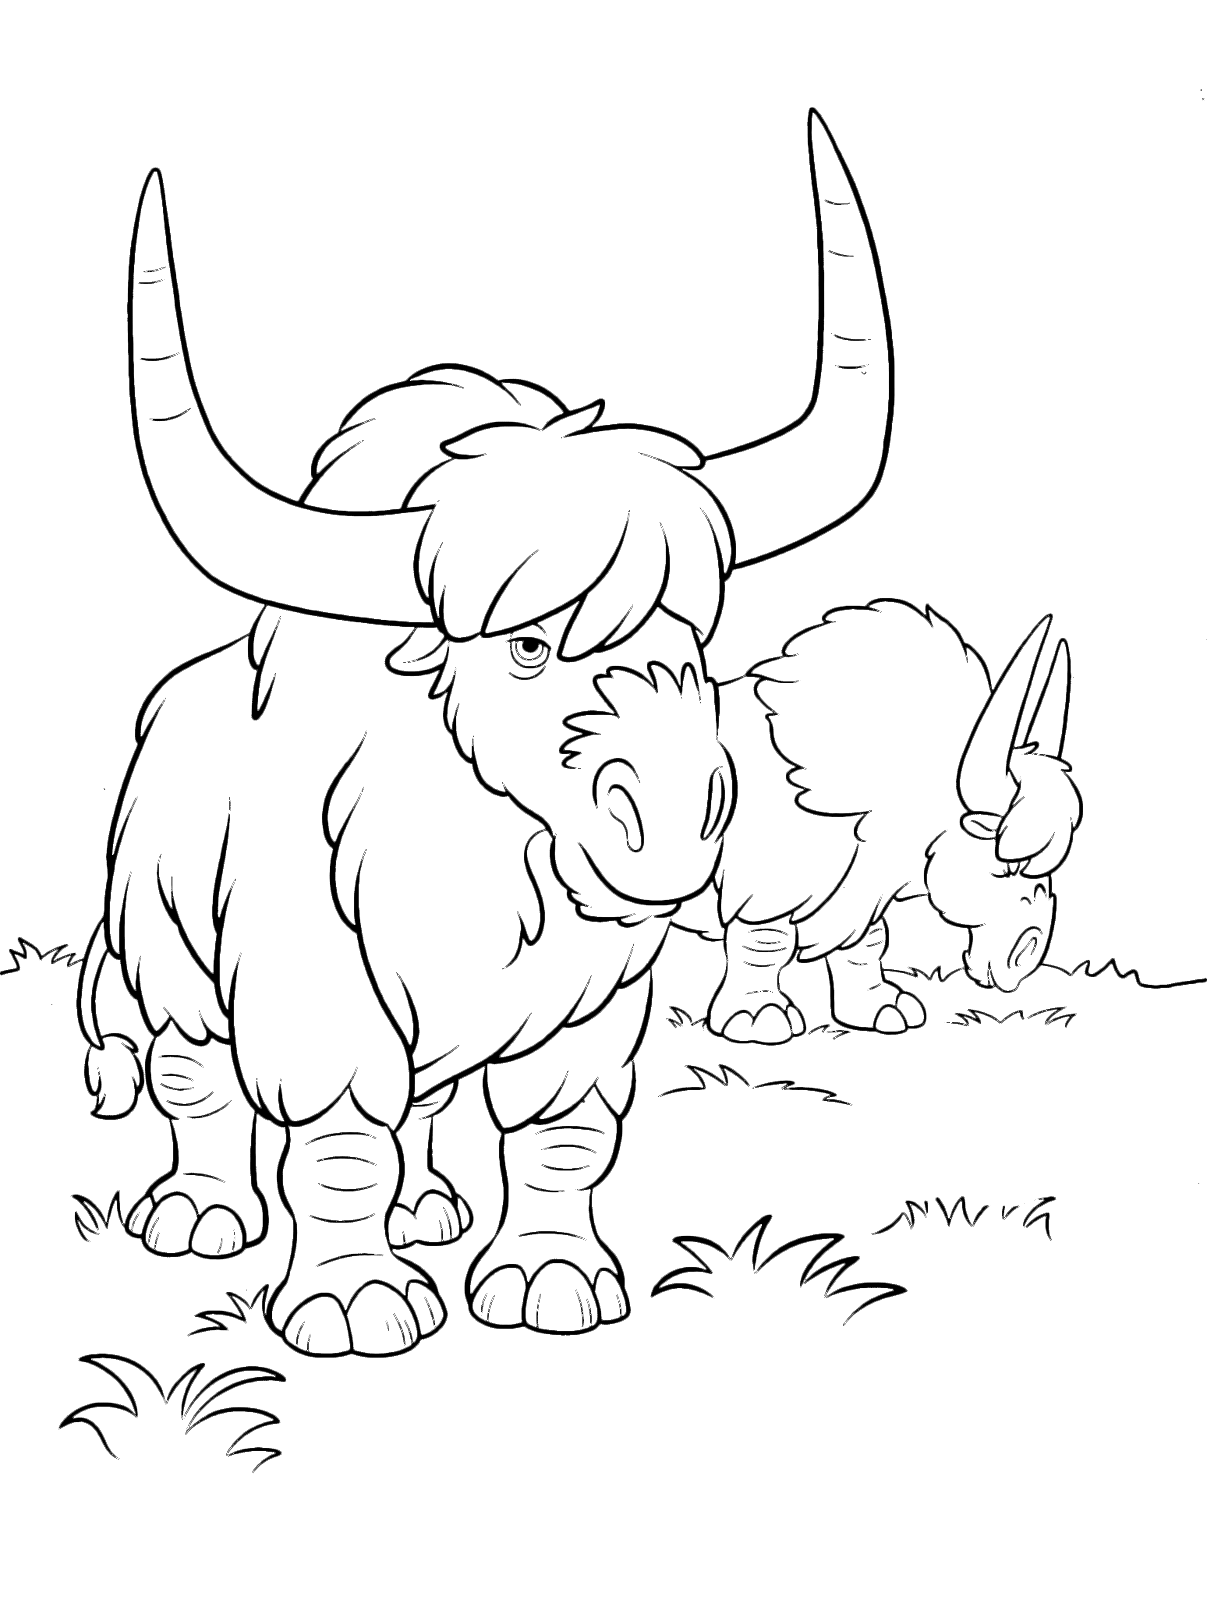 The Good Dinosaur - Two herd buffaloes